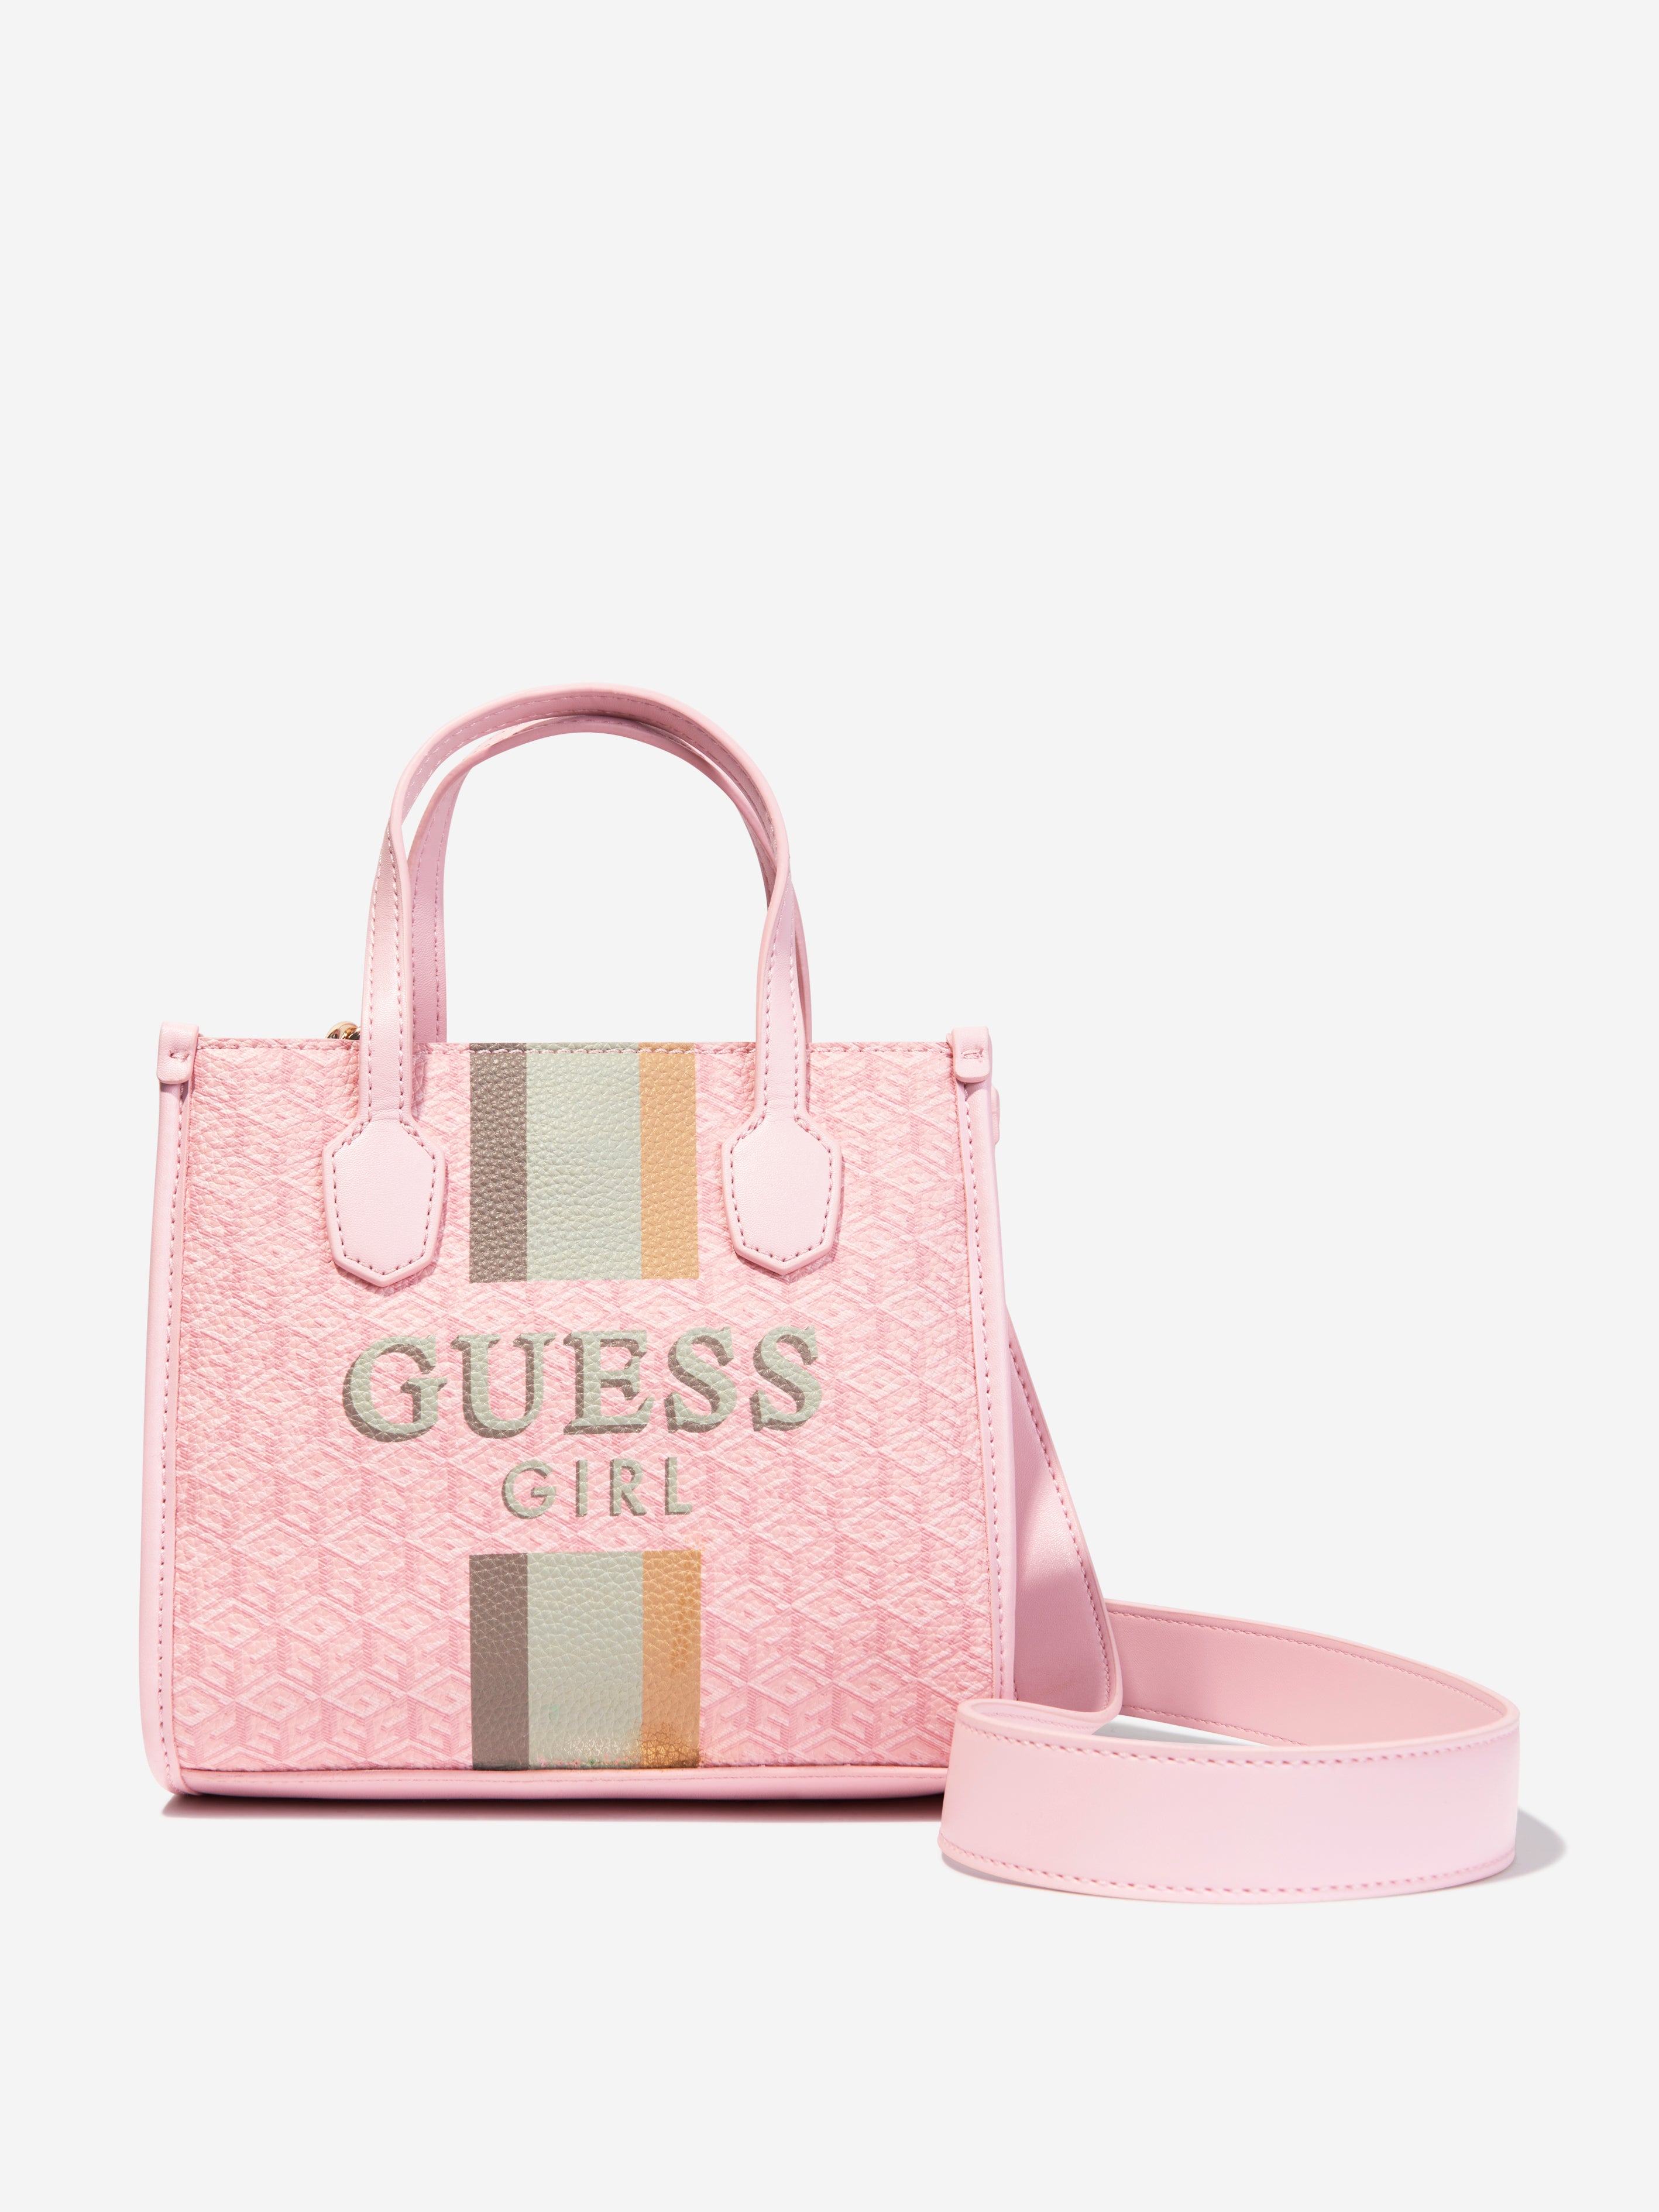 Guess Girls Mini Tote Bag in Pink